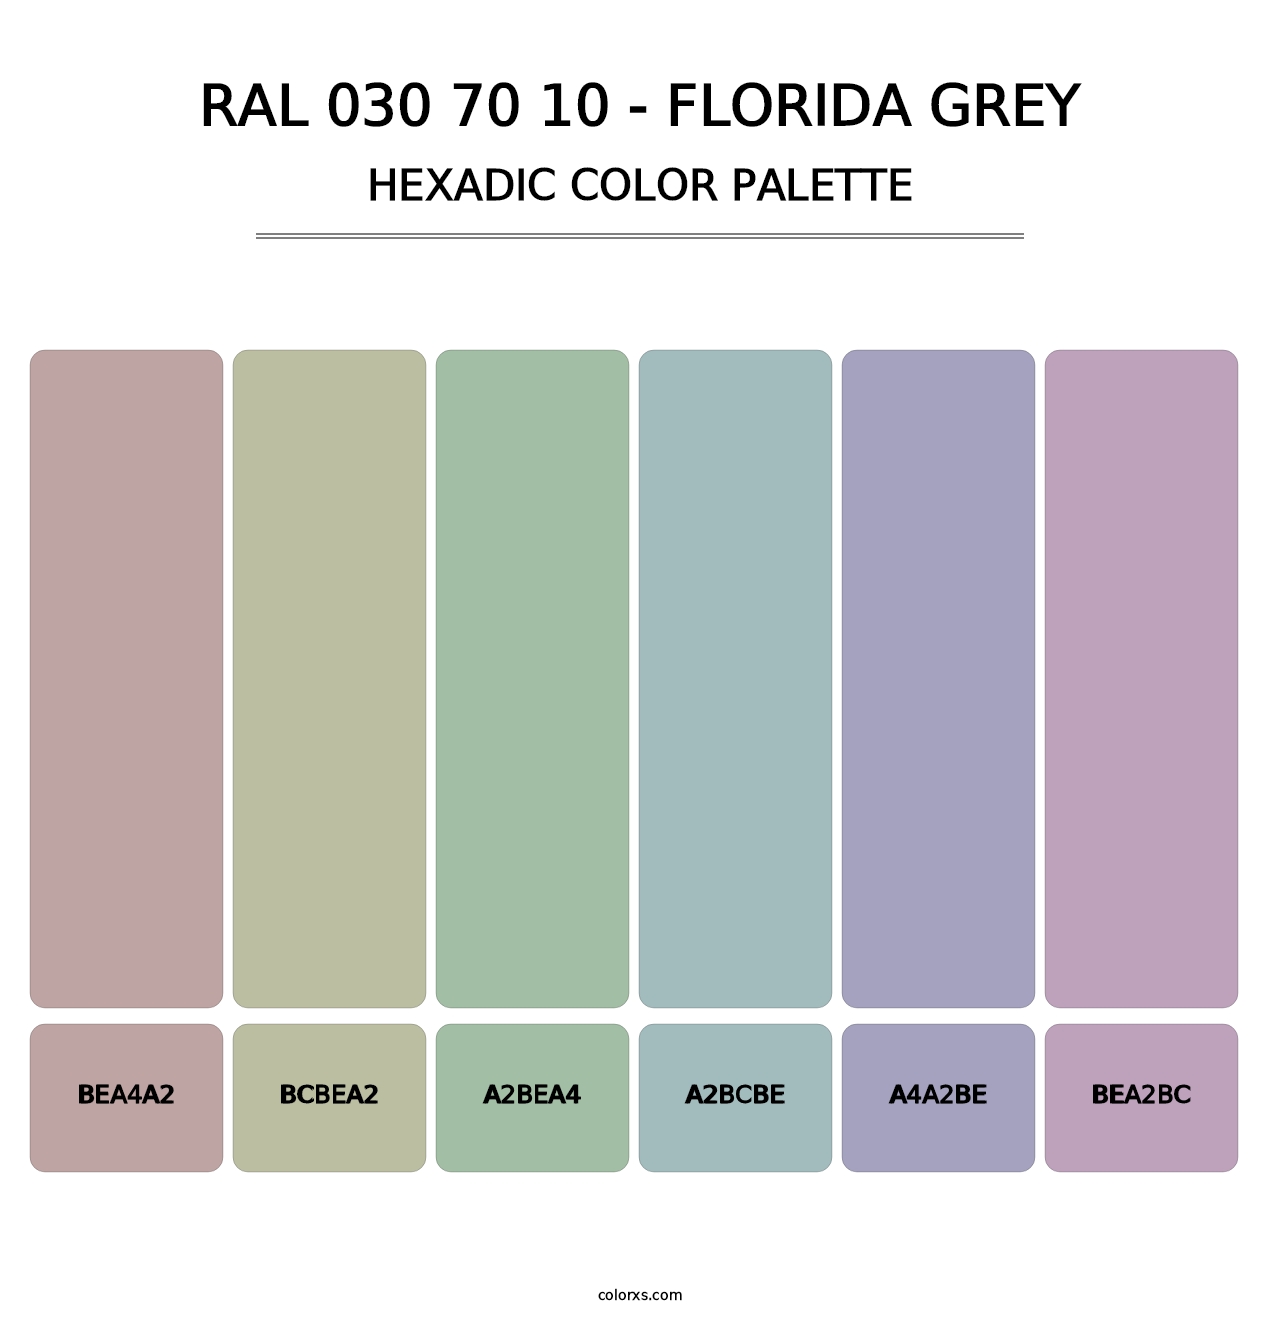 RAL 030 70 10 - Florida Grey - Hexadic Color Palette